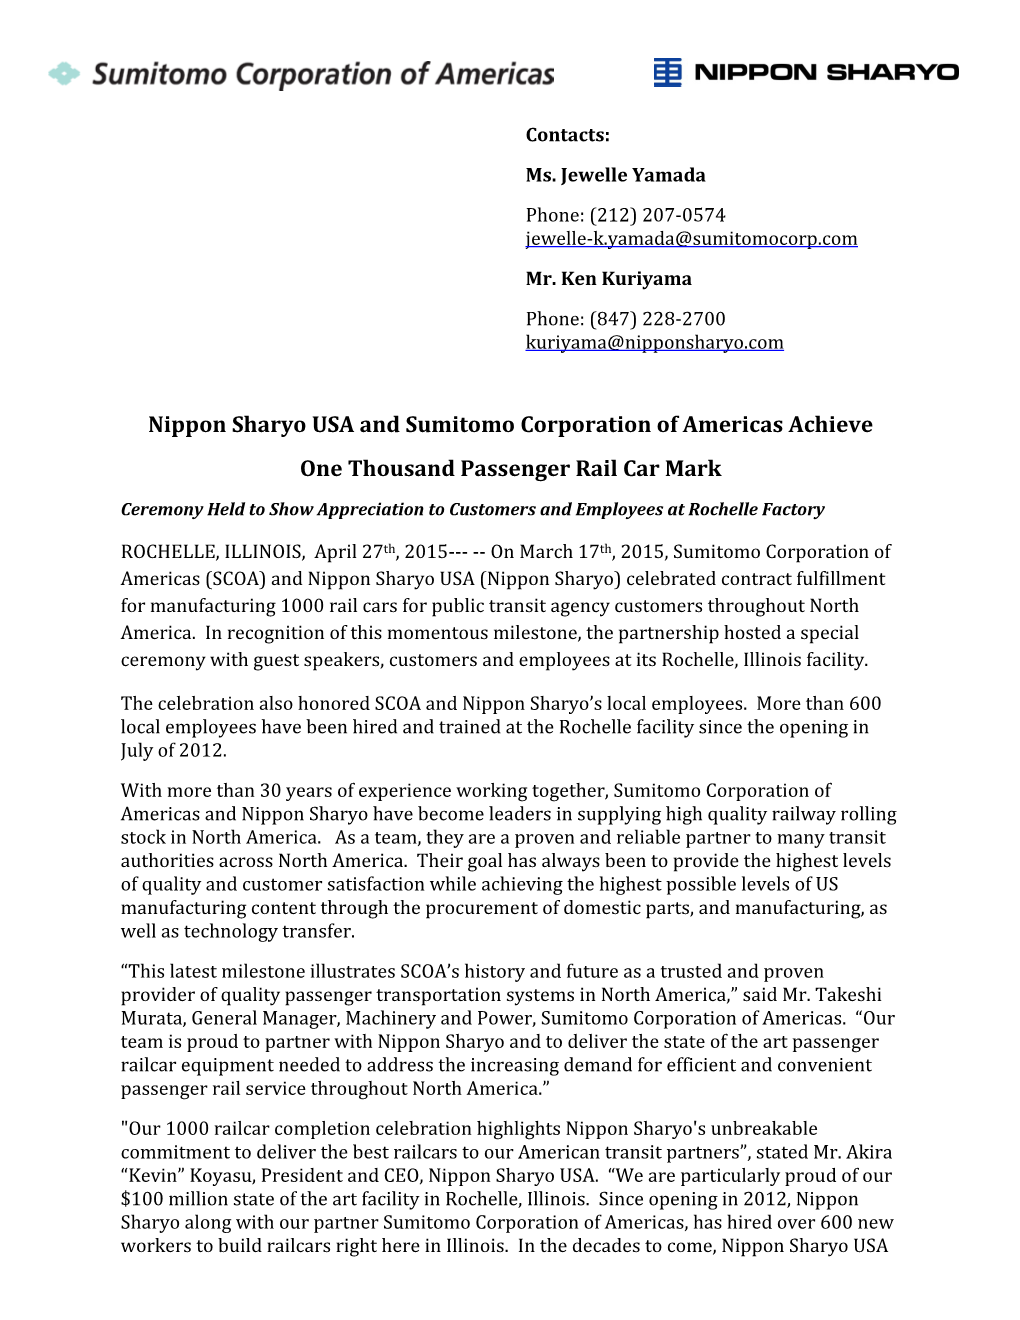 Nippon Sharyo USA and Sumitomo Corporation of Americas Achieve One Thousand Passenger Rail Car Mark